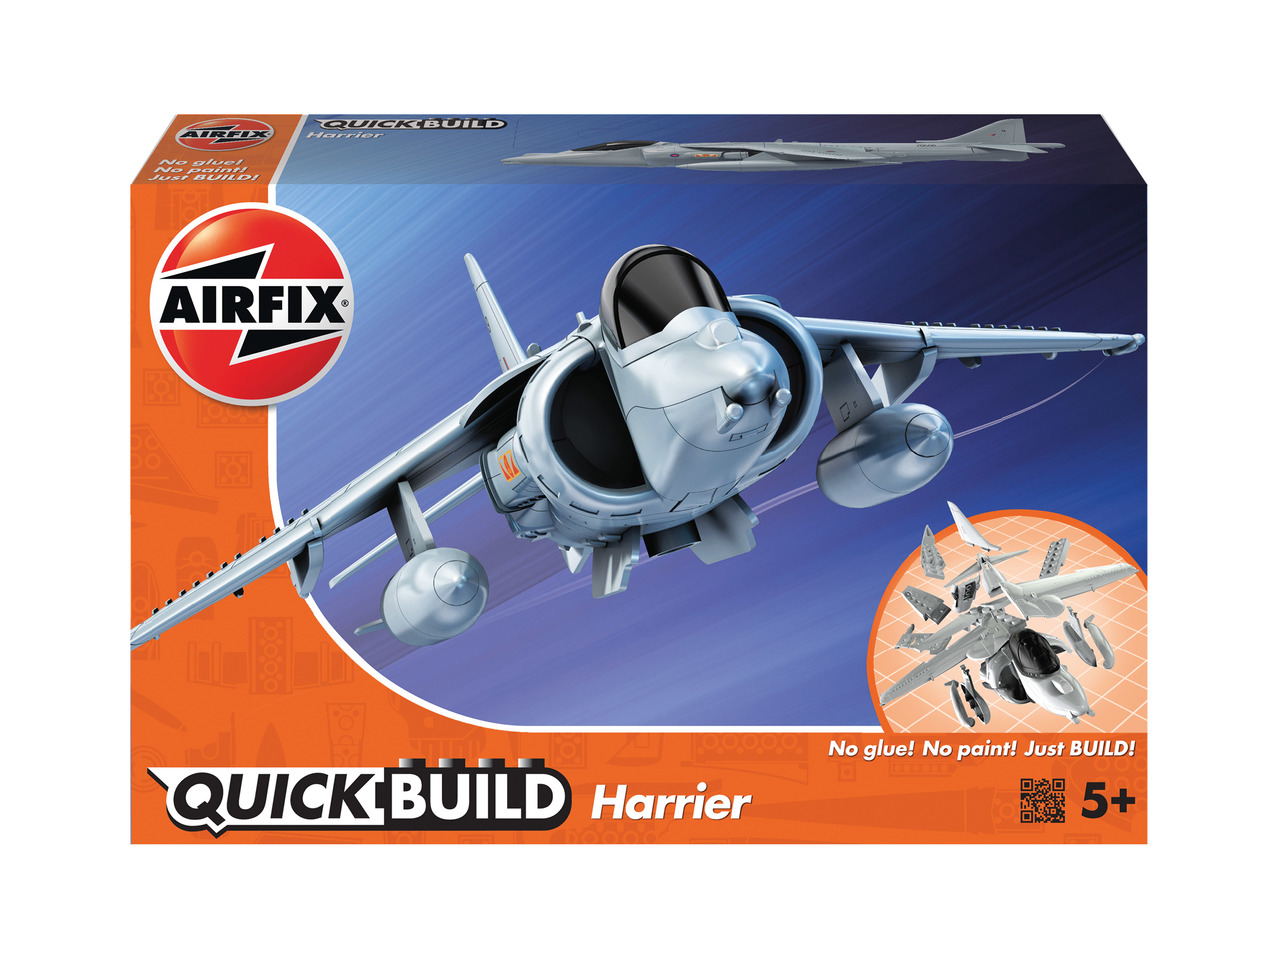 Airfix Quickbuild Toy 1